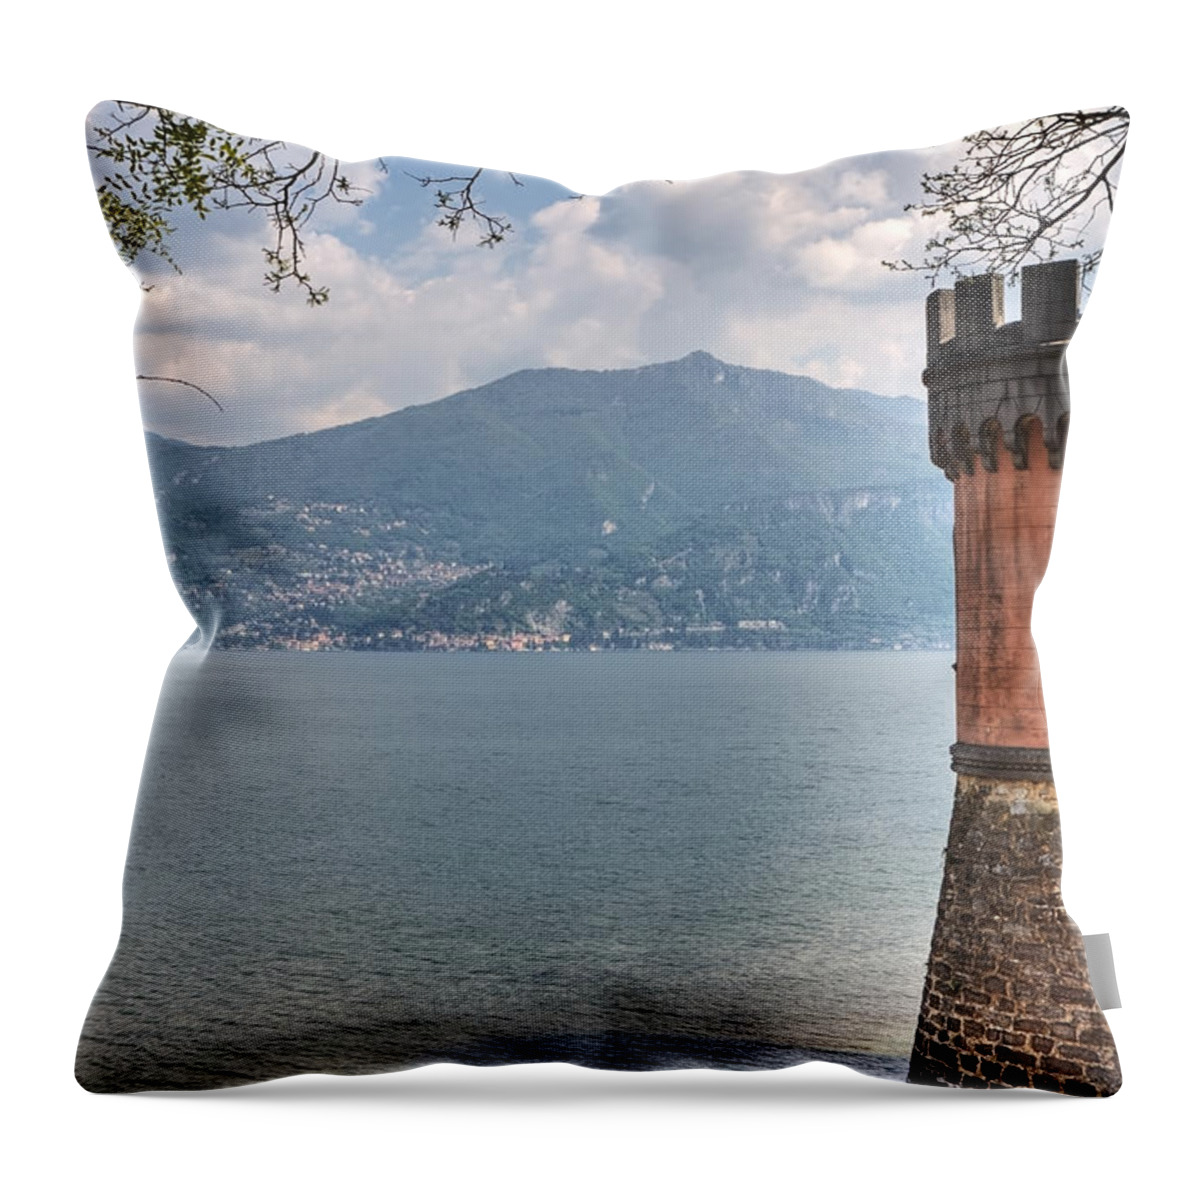 Travel Europe Throw Pillow featuring the photograph Lago di Como #1 by Joana Kruse